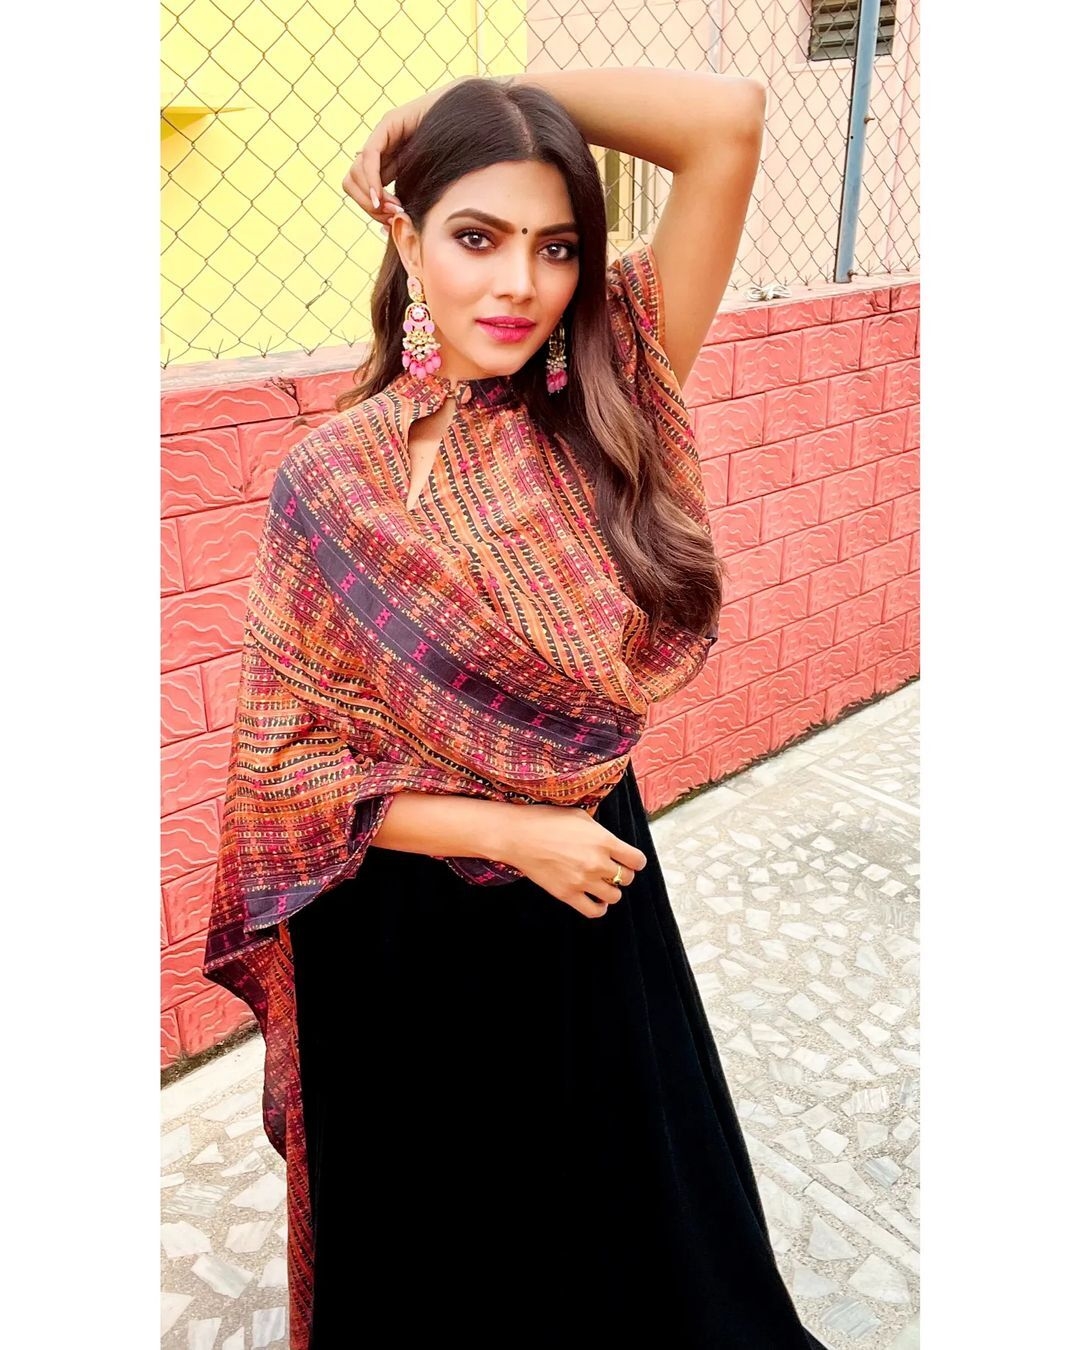 Lahari Shari New Amazing New Clicks In Black Dress